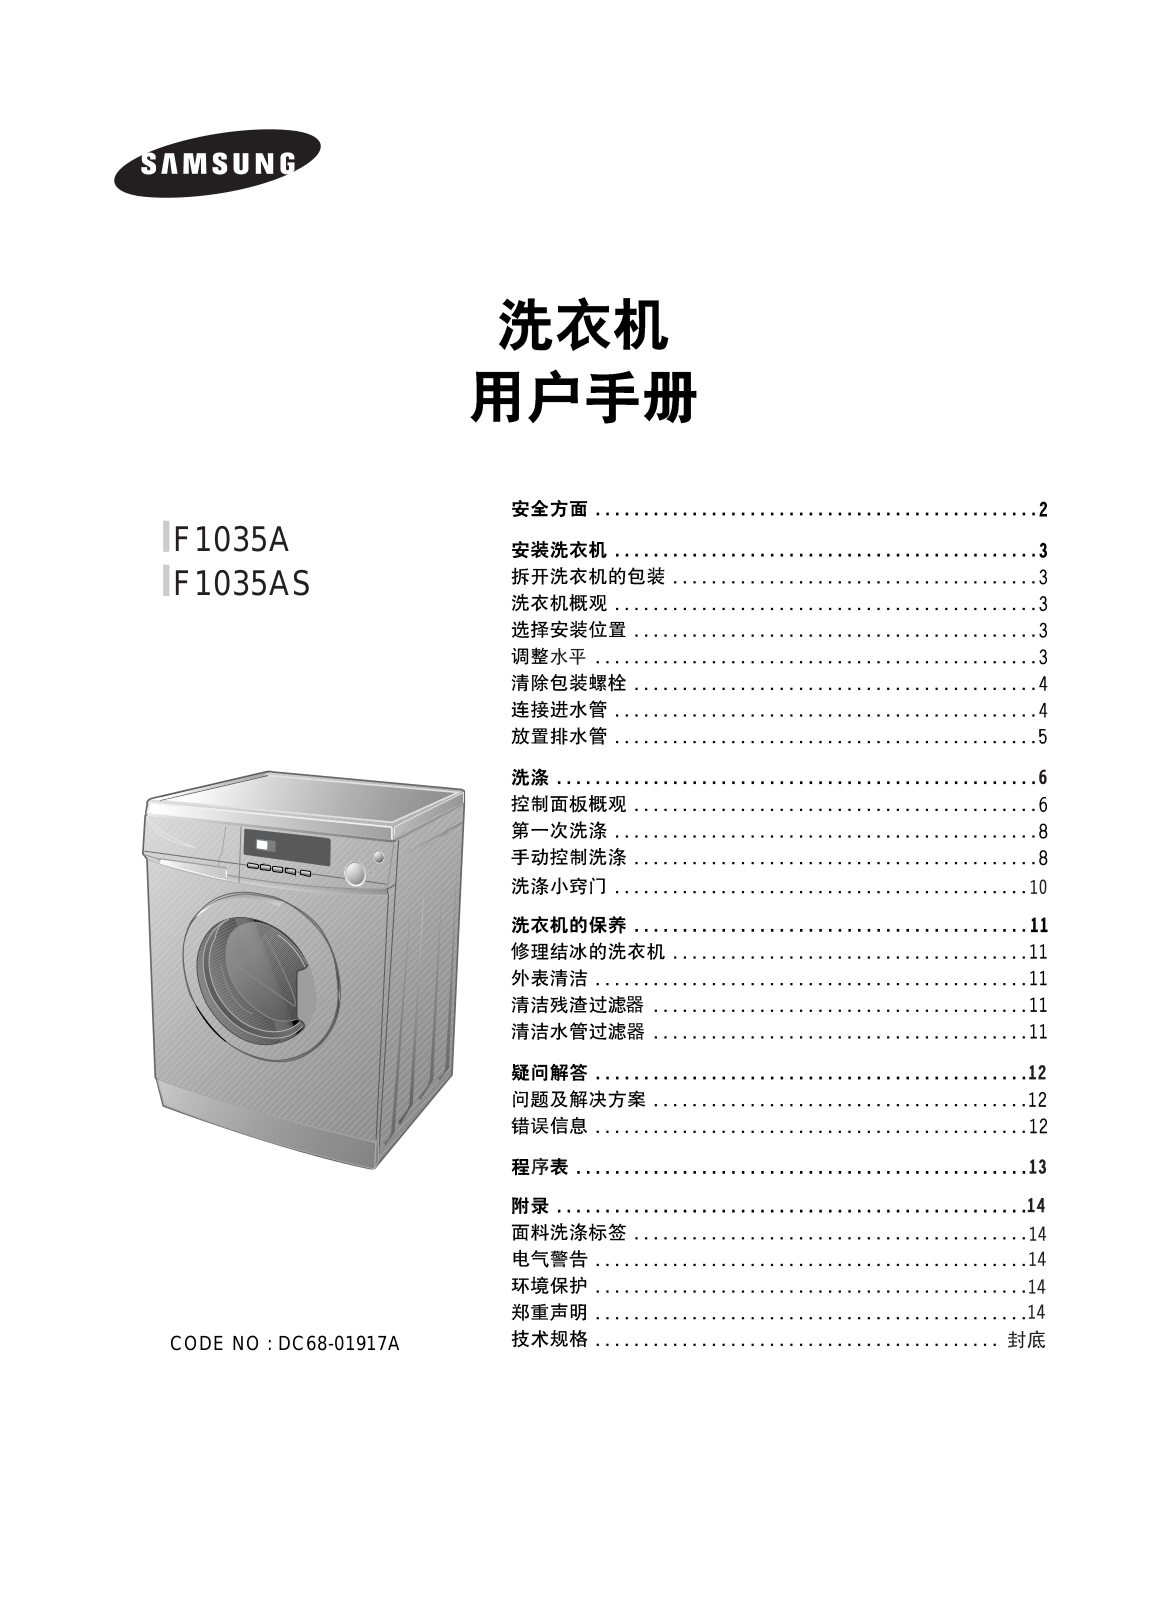 Samsung F835S, F1035S User Manual